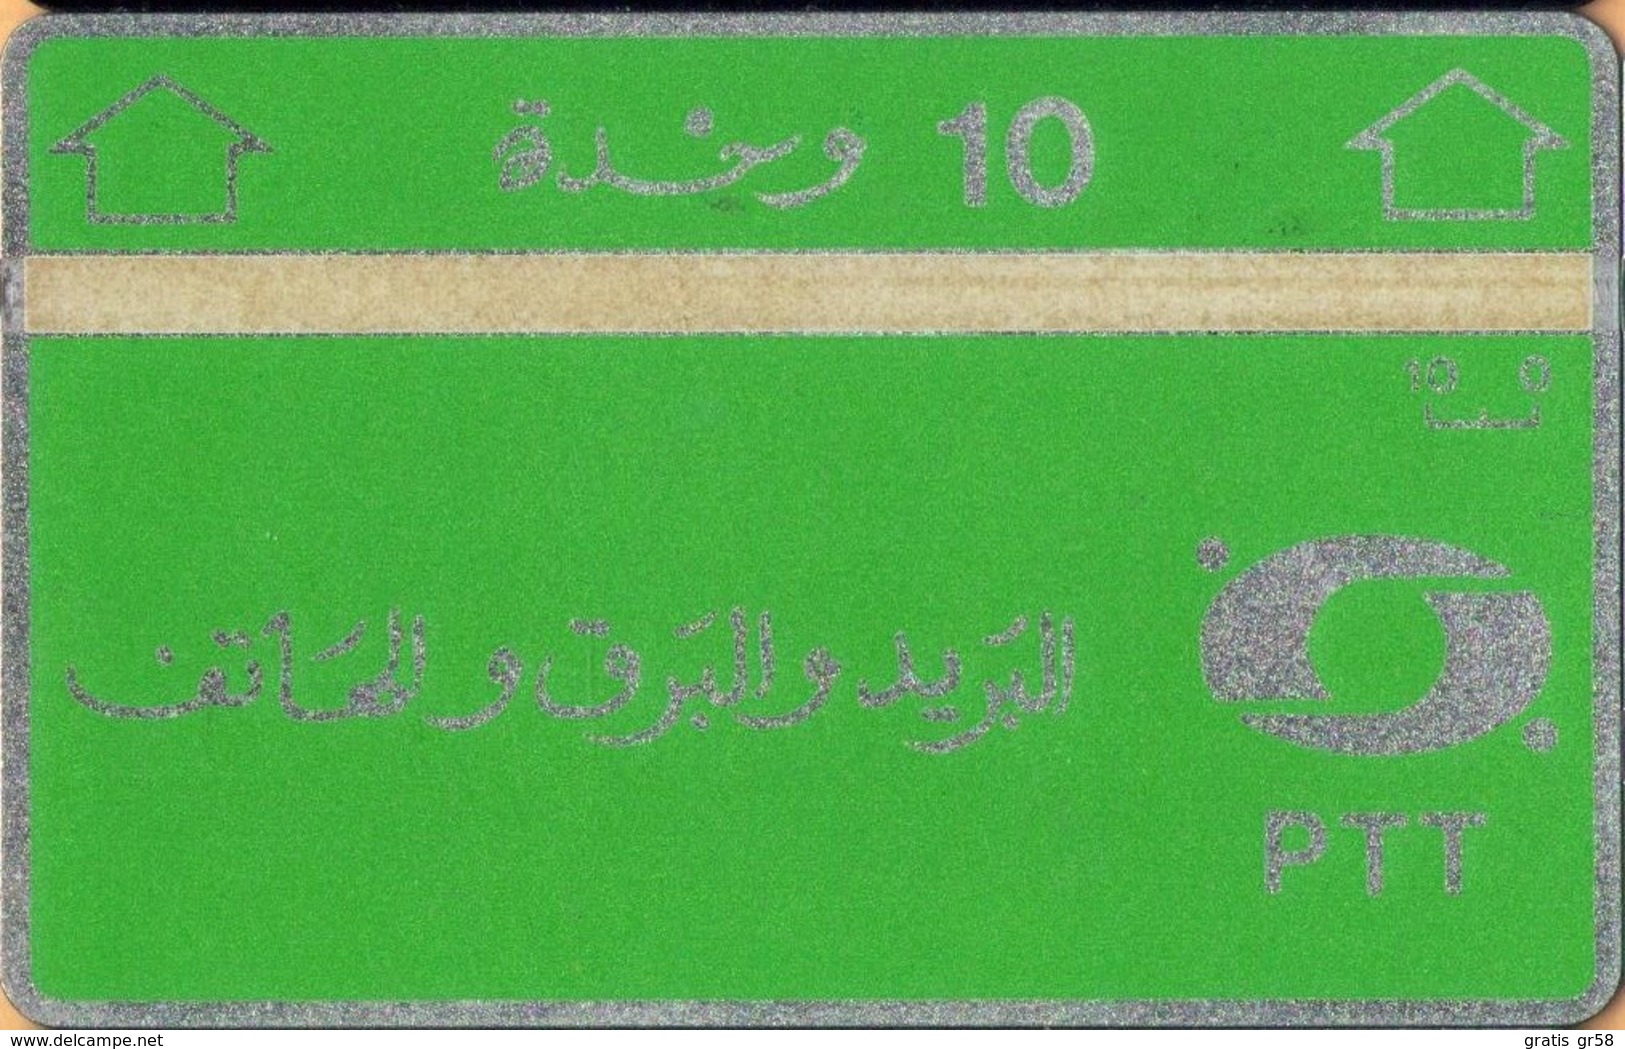 Algeria -ALG-PT-03, L&G, Green & Silver, 4Mm Band, 706B, 10U, 60,000ex, 1987, Mint - Algeria